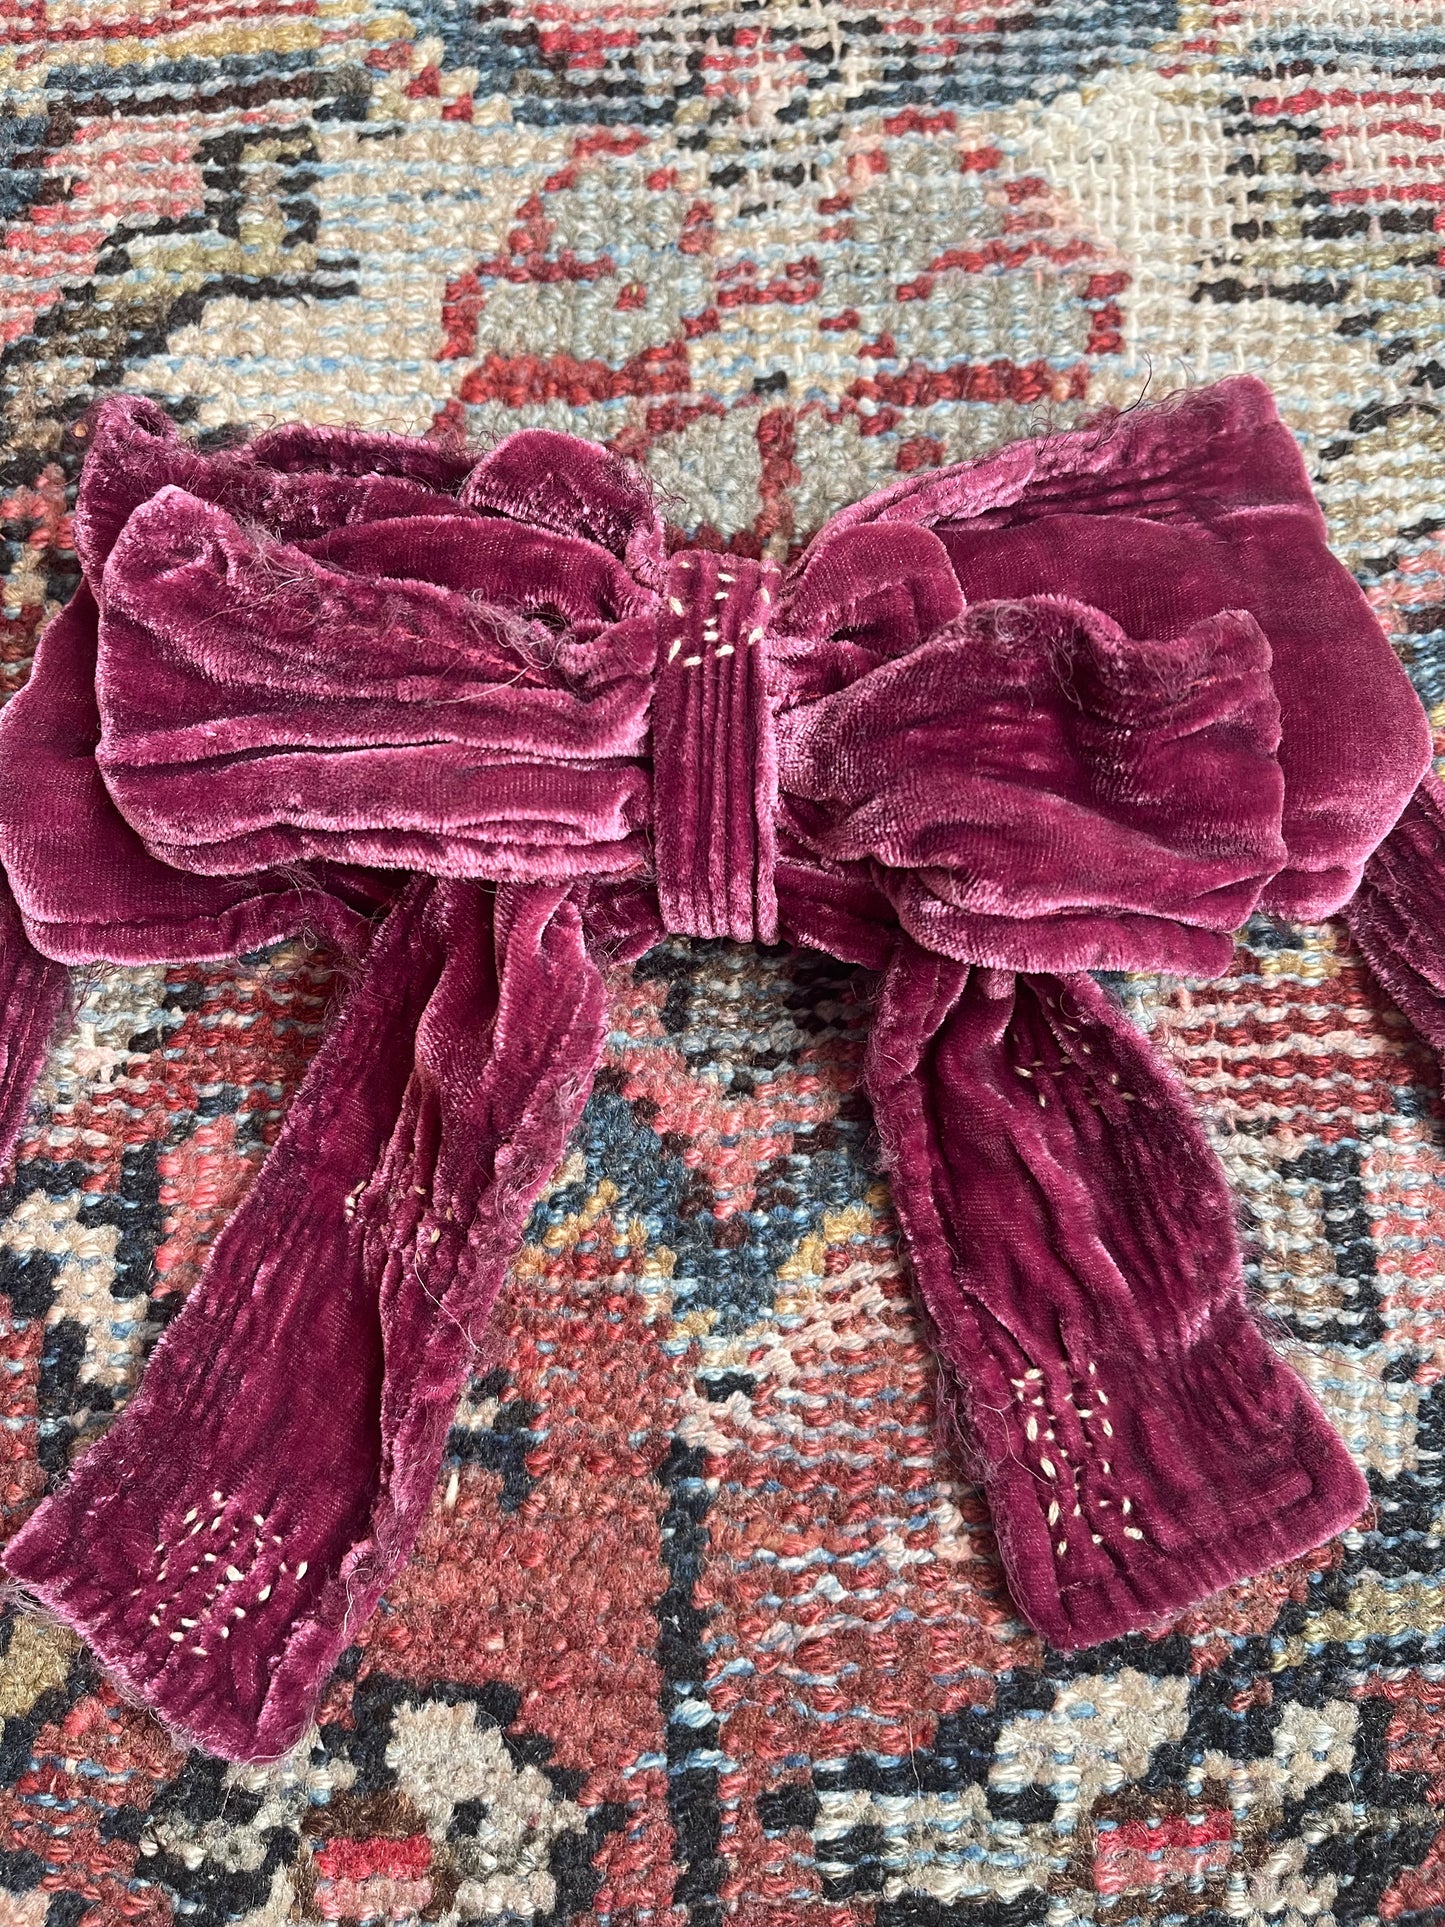 Silk Velvet Tasmin Bowtie in Boysenberry by Magnolia Pearl